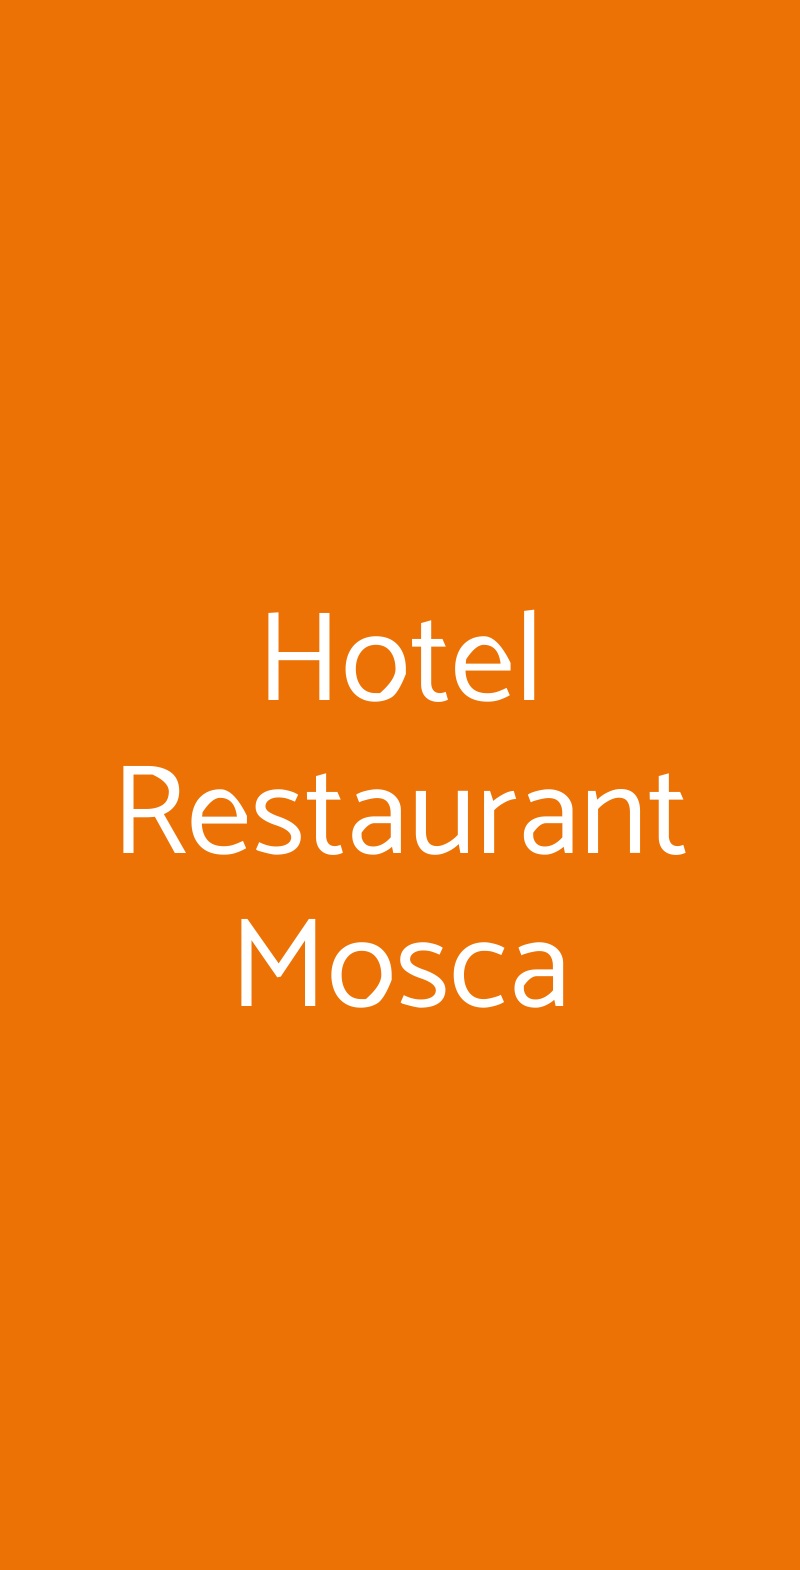 Hotel Restaurant Mosca Monza menù 1 pagina